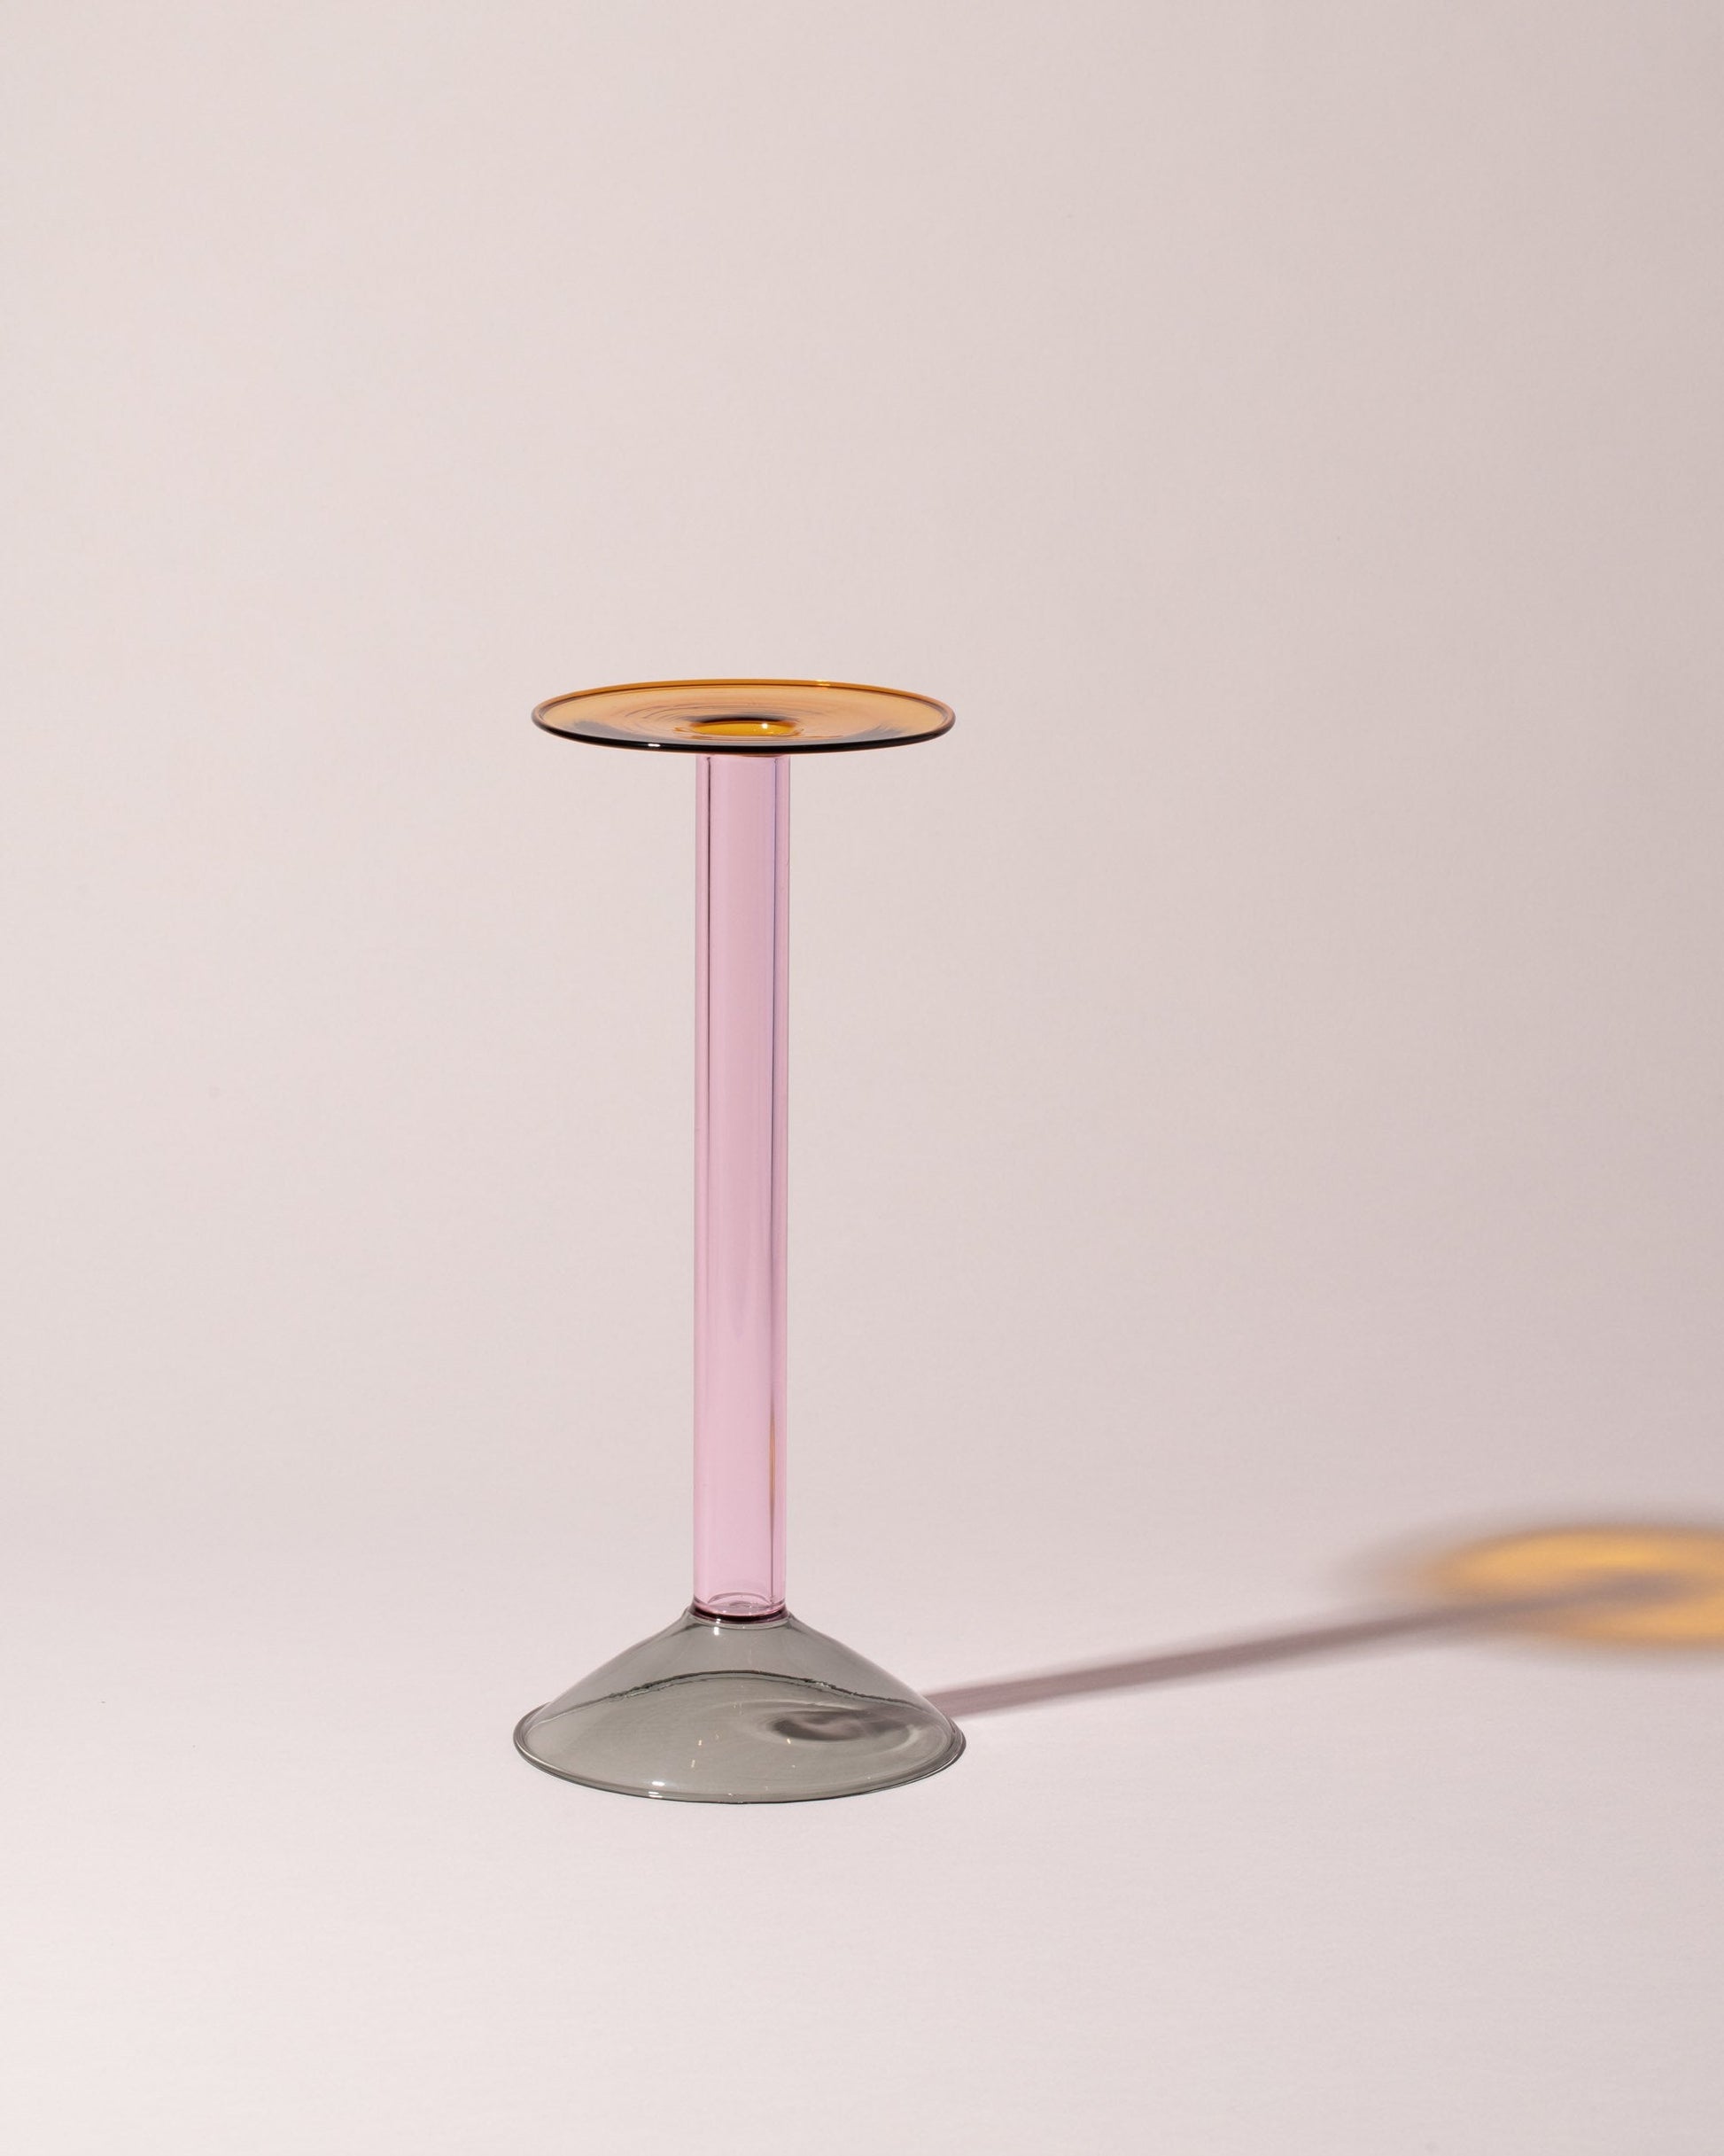 Ichendorf Milano Large Grey/Pink/Amber Rainbow Candleholder on light color background.